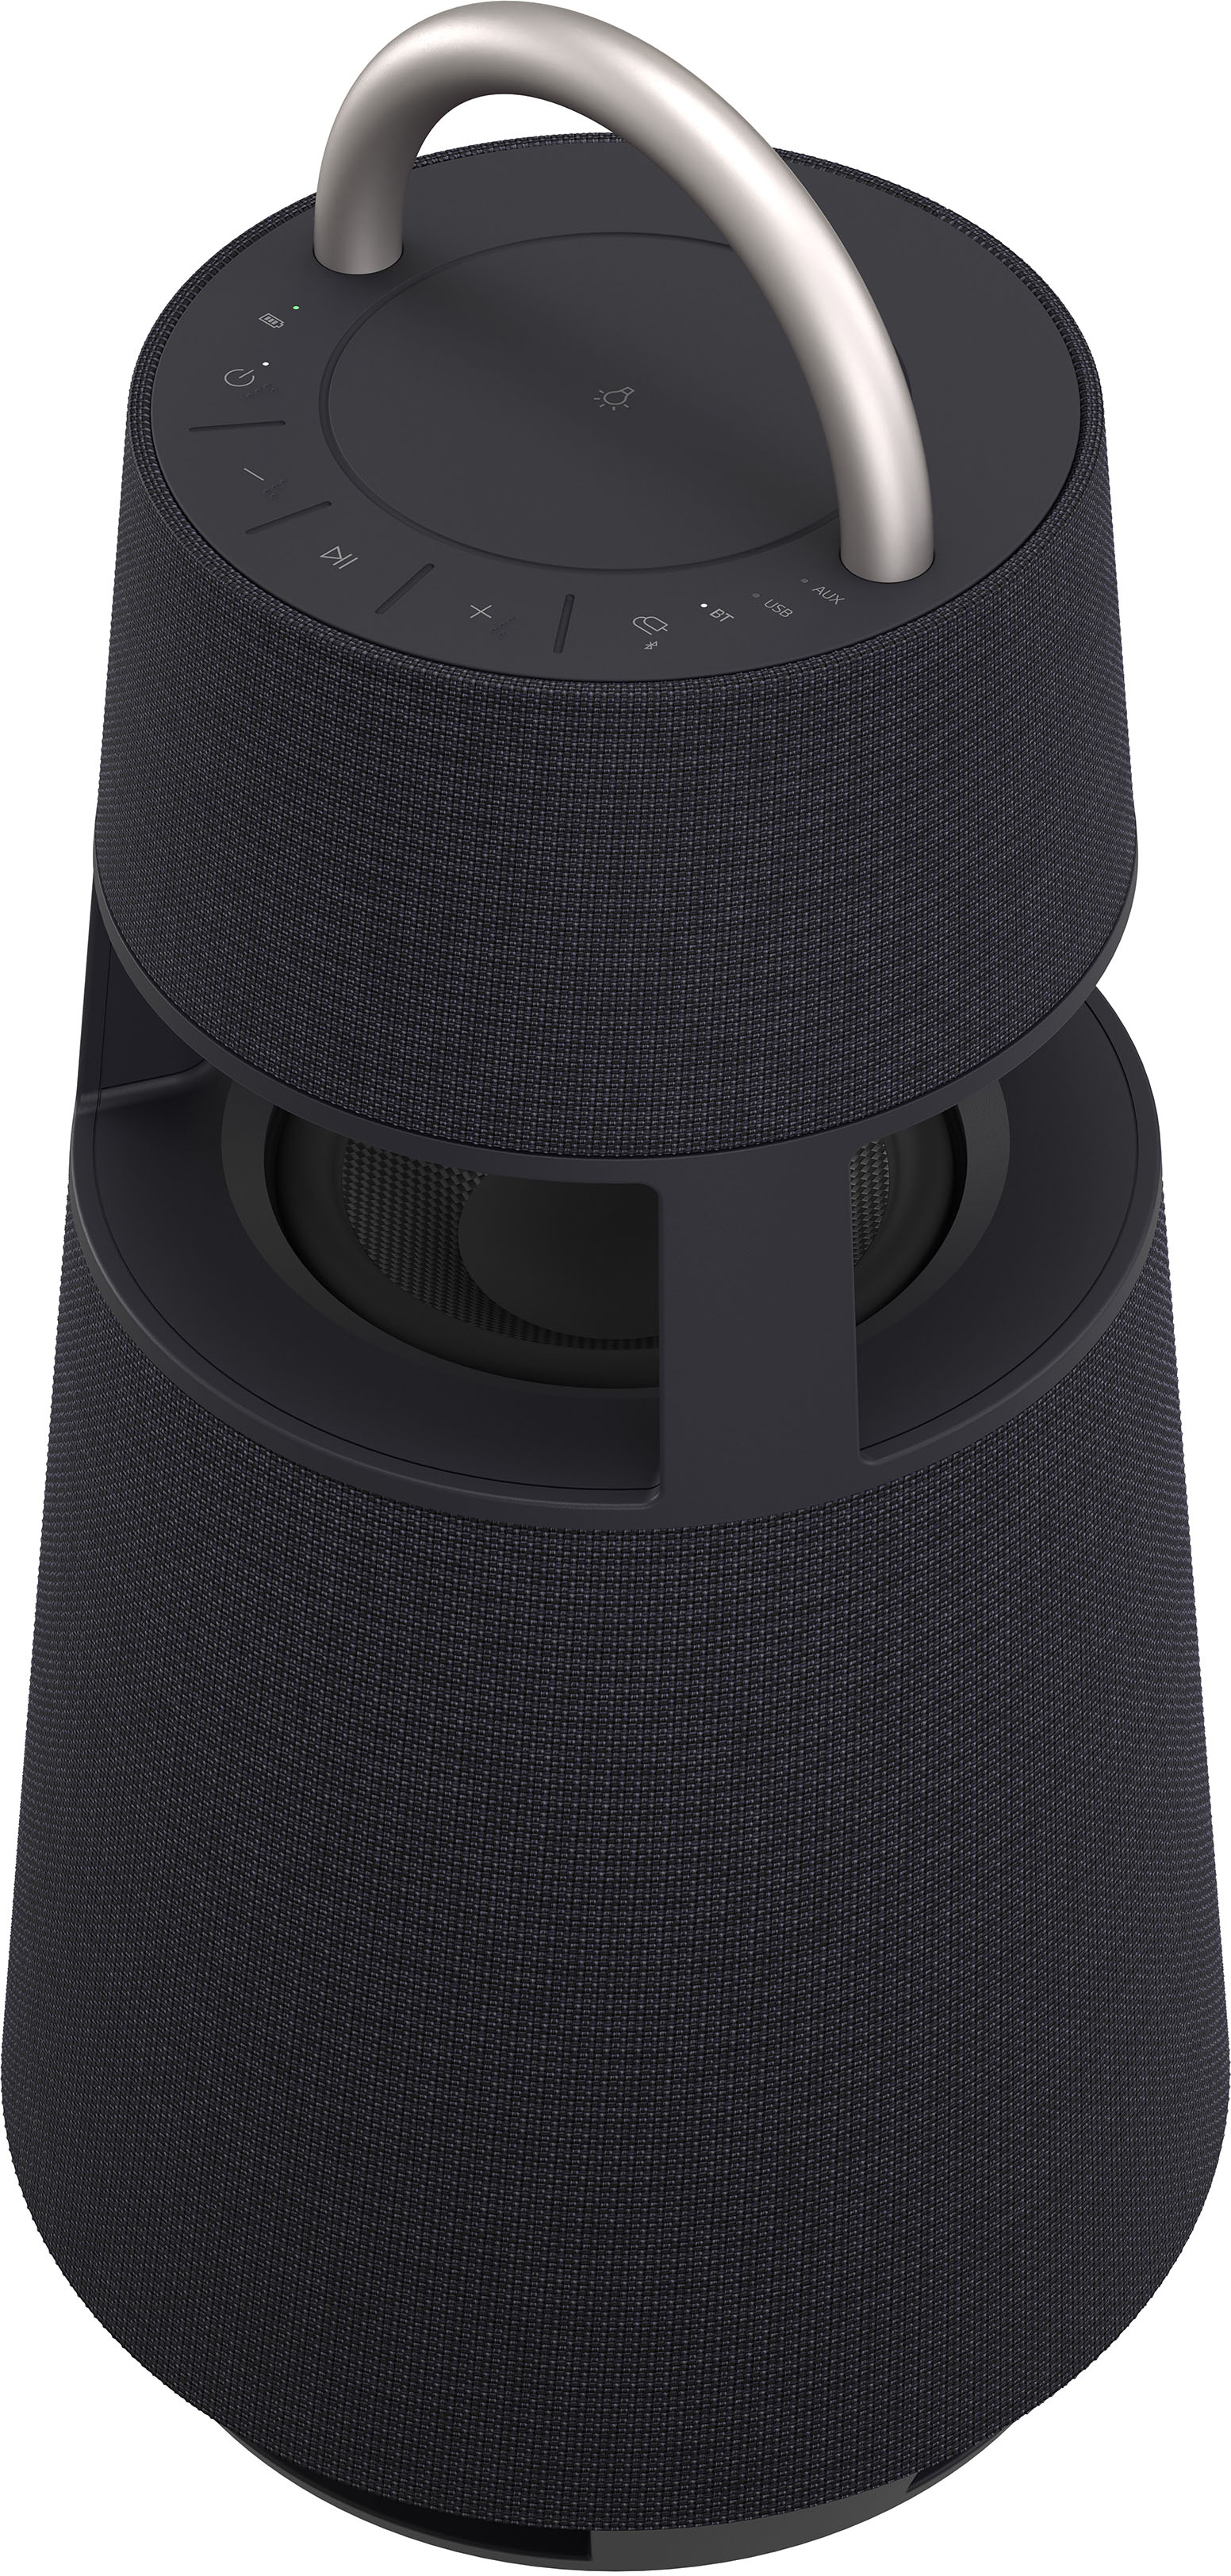 Angle View: LG - XBOOM 360 Portable Bluetooth Omnidirectional Speaker - Black